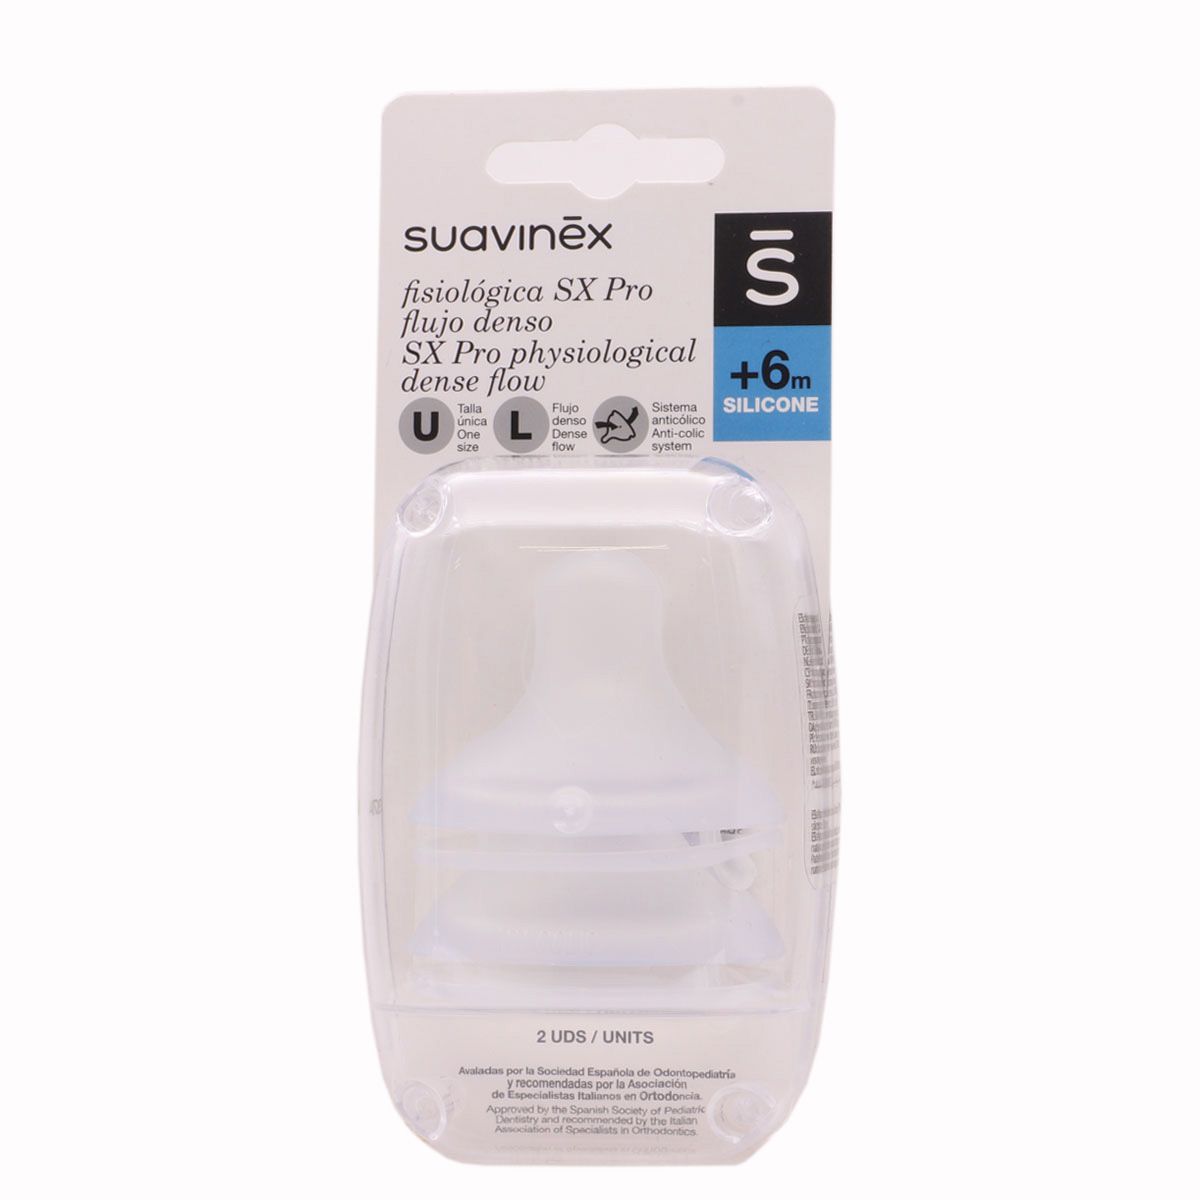 Suavinex Tetina Fisiologica Sx Pro Flujo Lento Silicona +0m 2uds